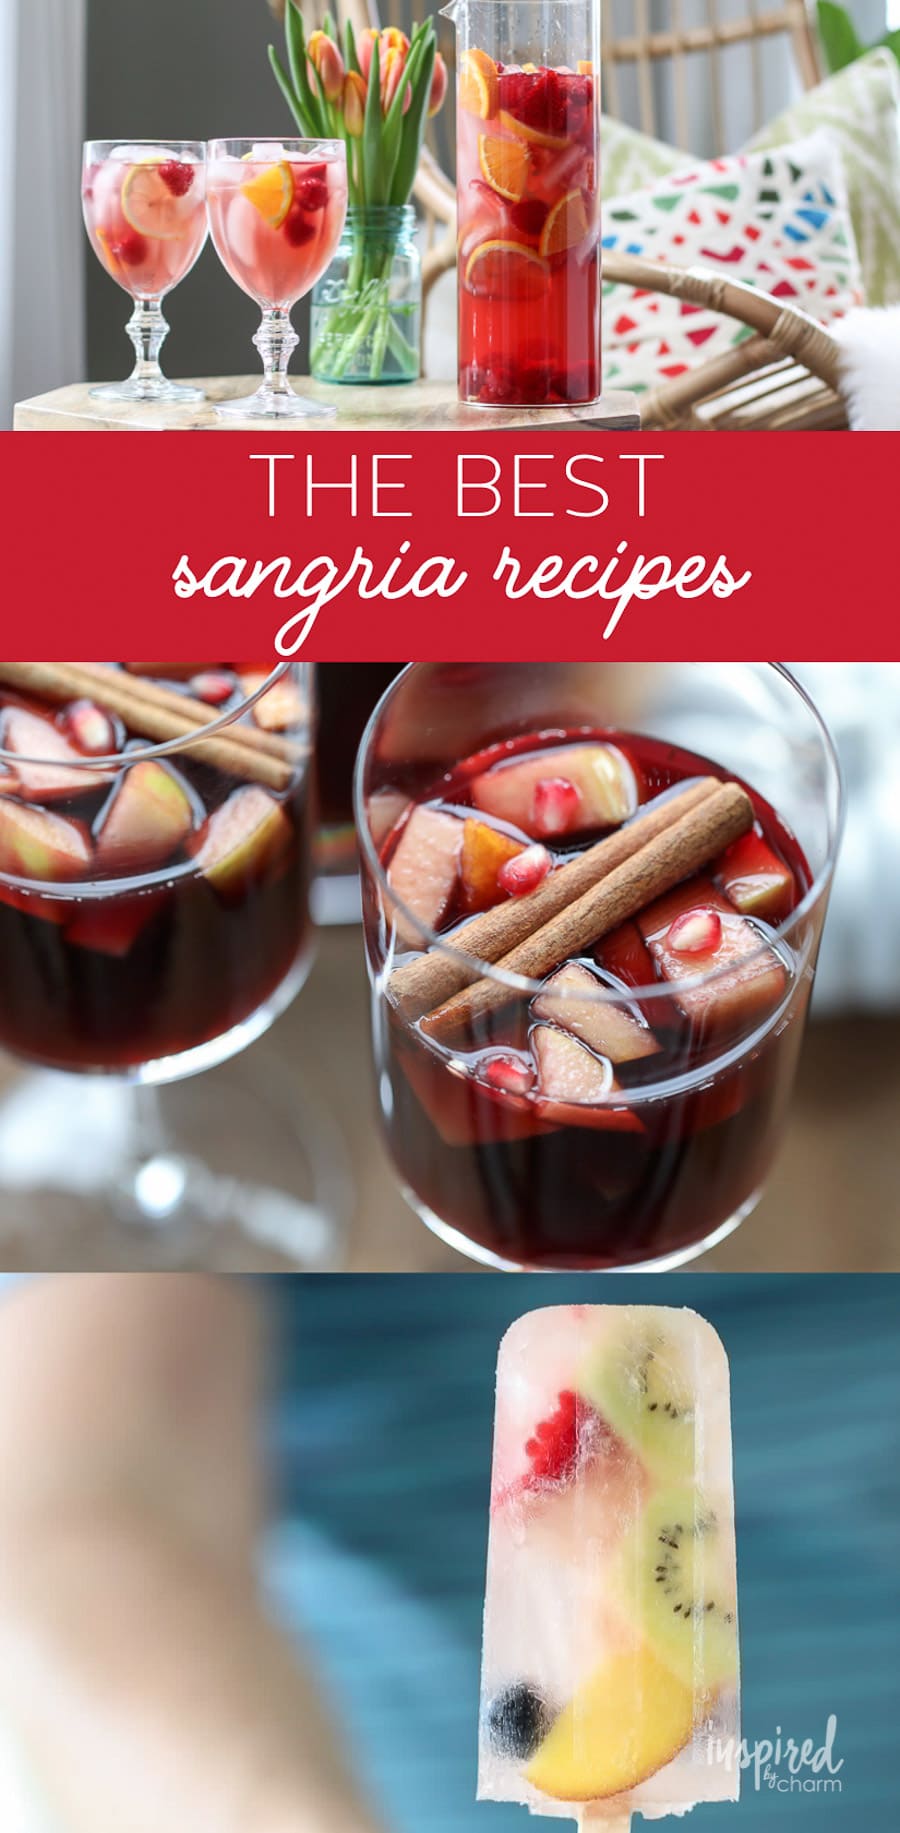 The Best Sangria Recipes #sangria #recipe #cocktail #thebestsangria #cocktails #sangriarecipe